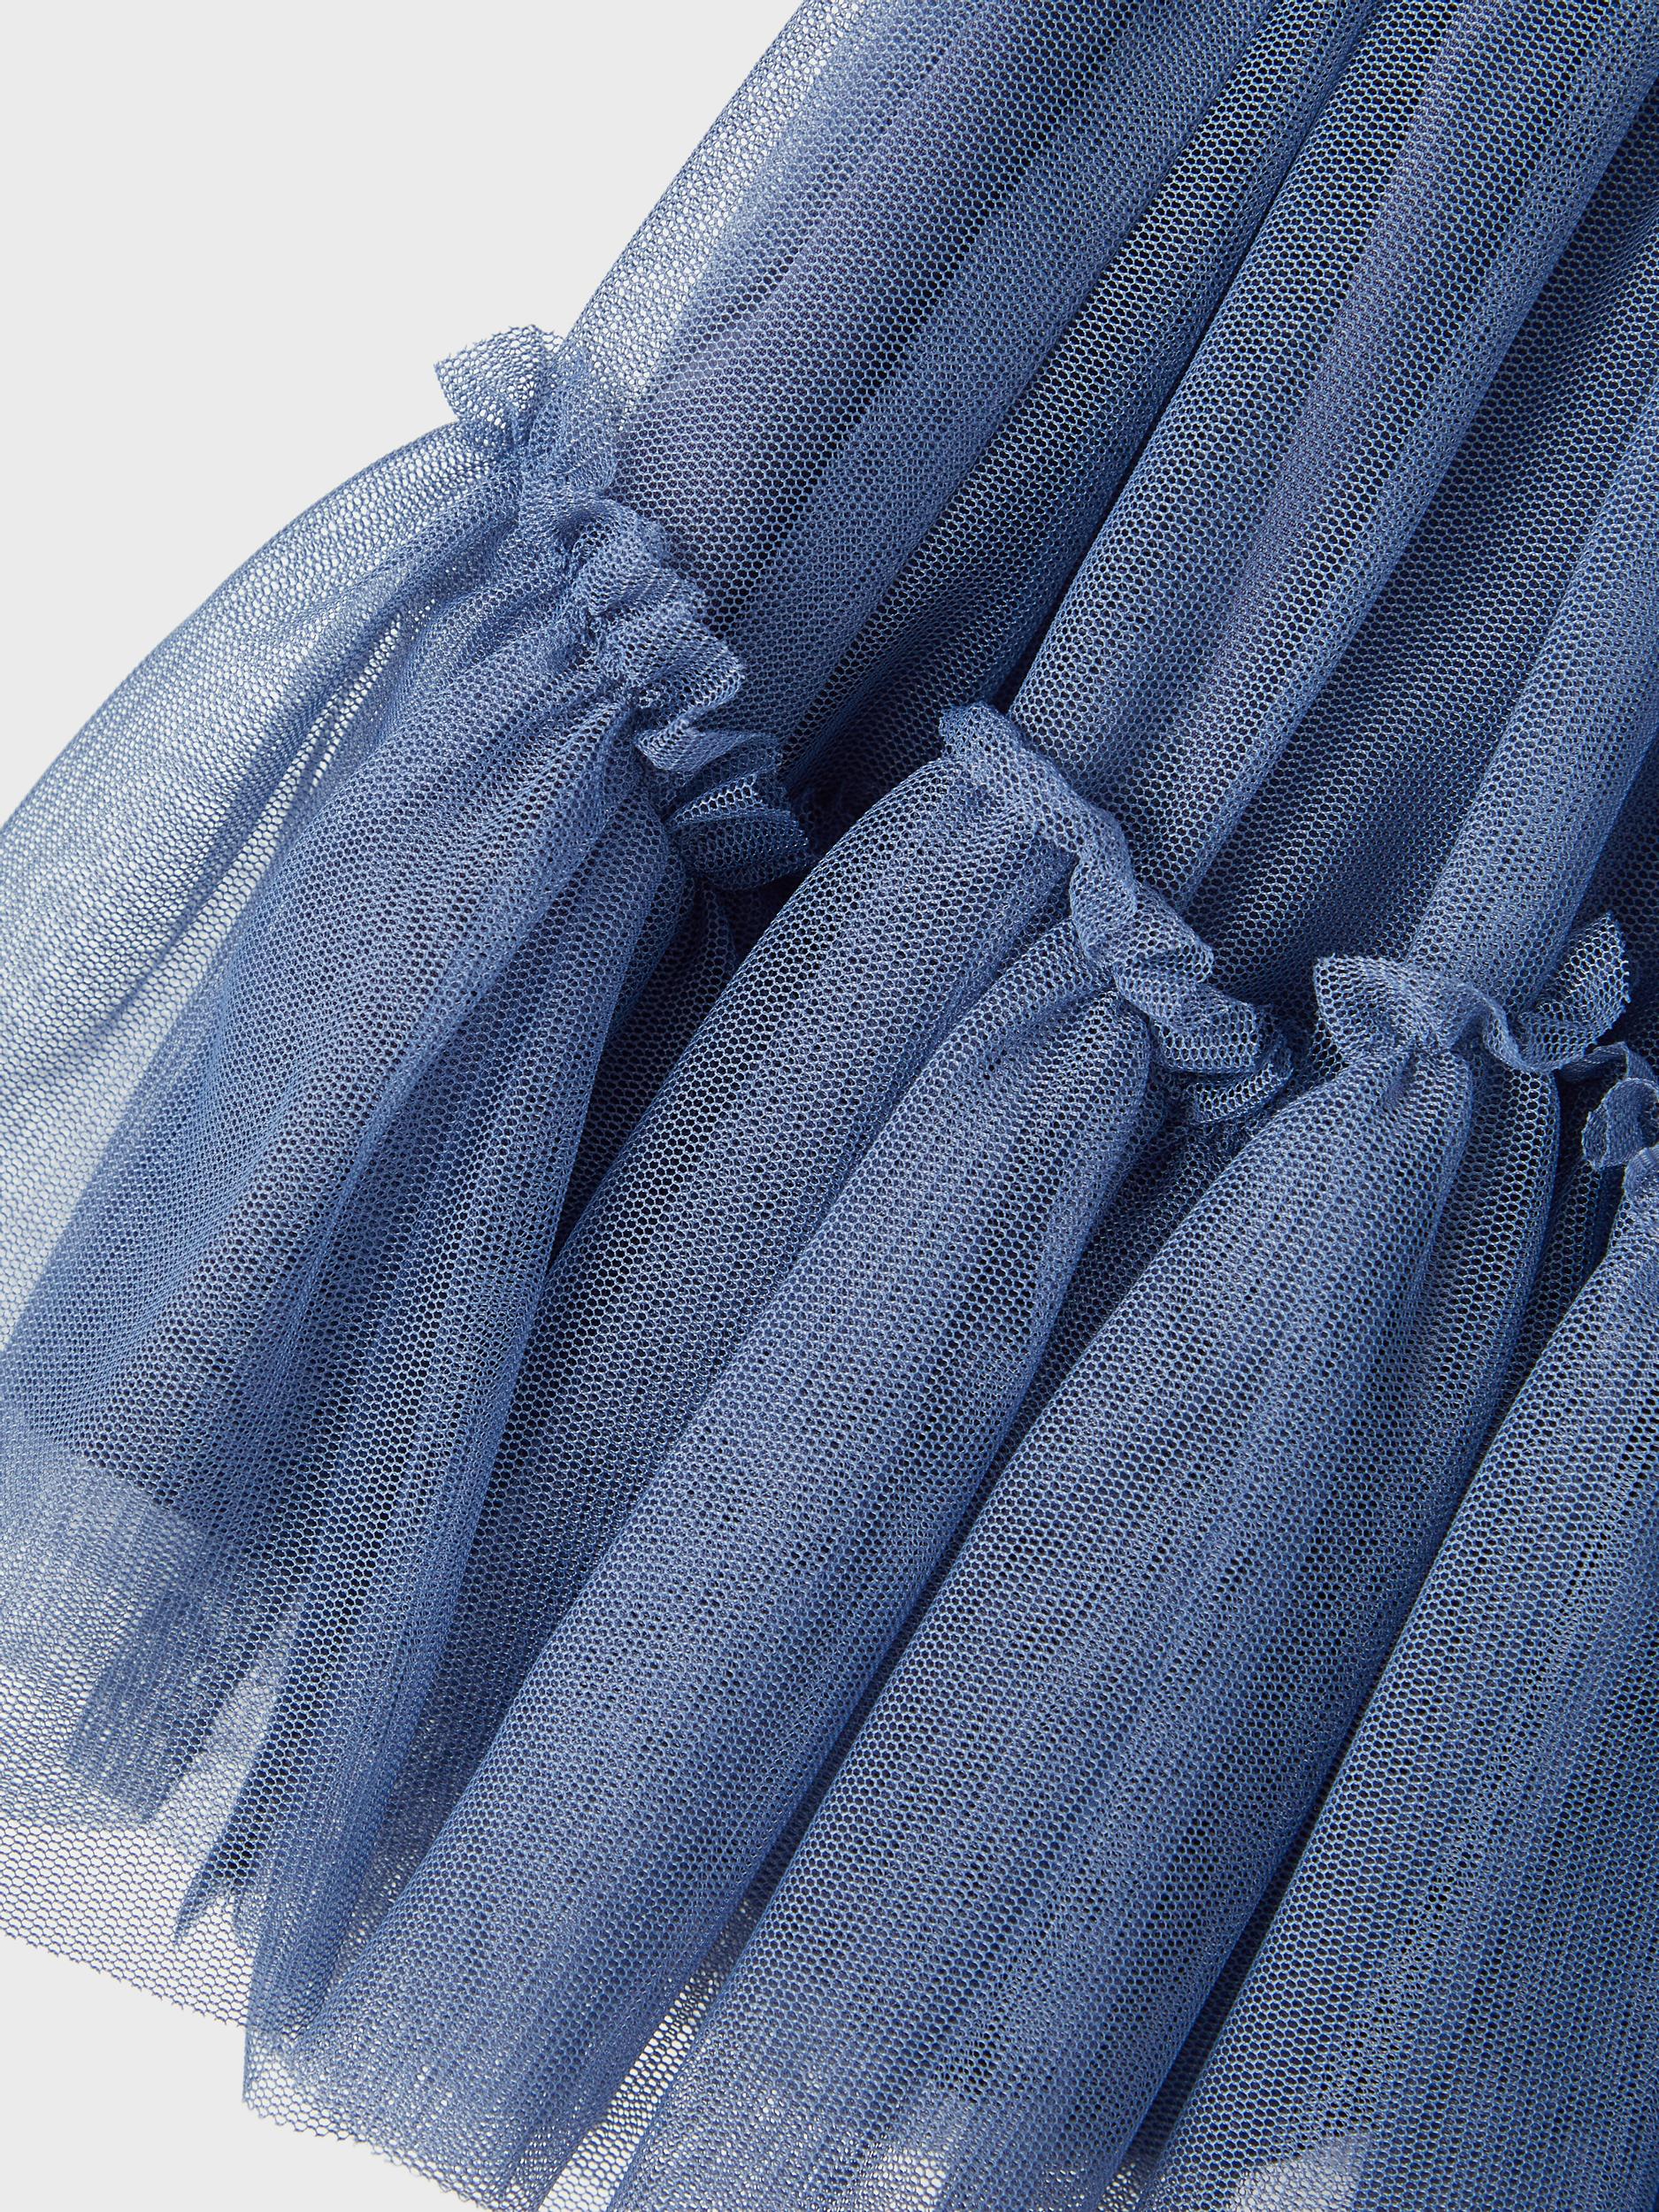 Blue Batille Tulle Skirt Mini Girl-Close Up View